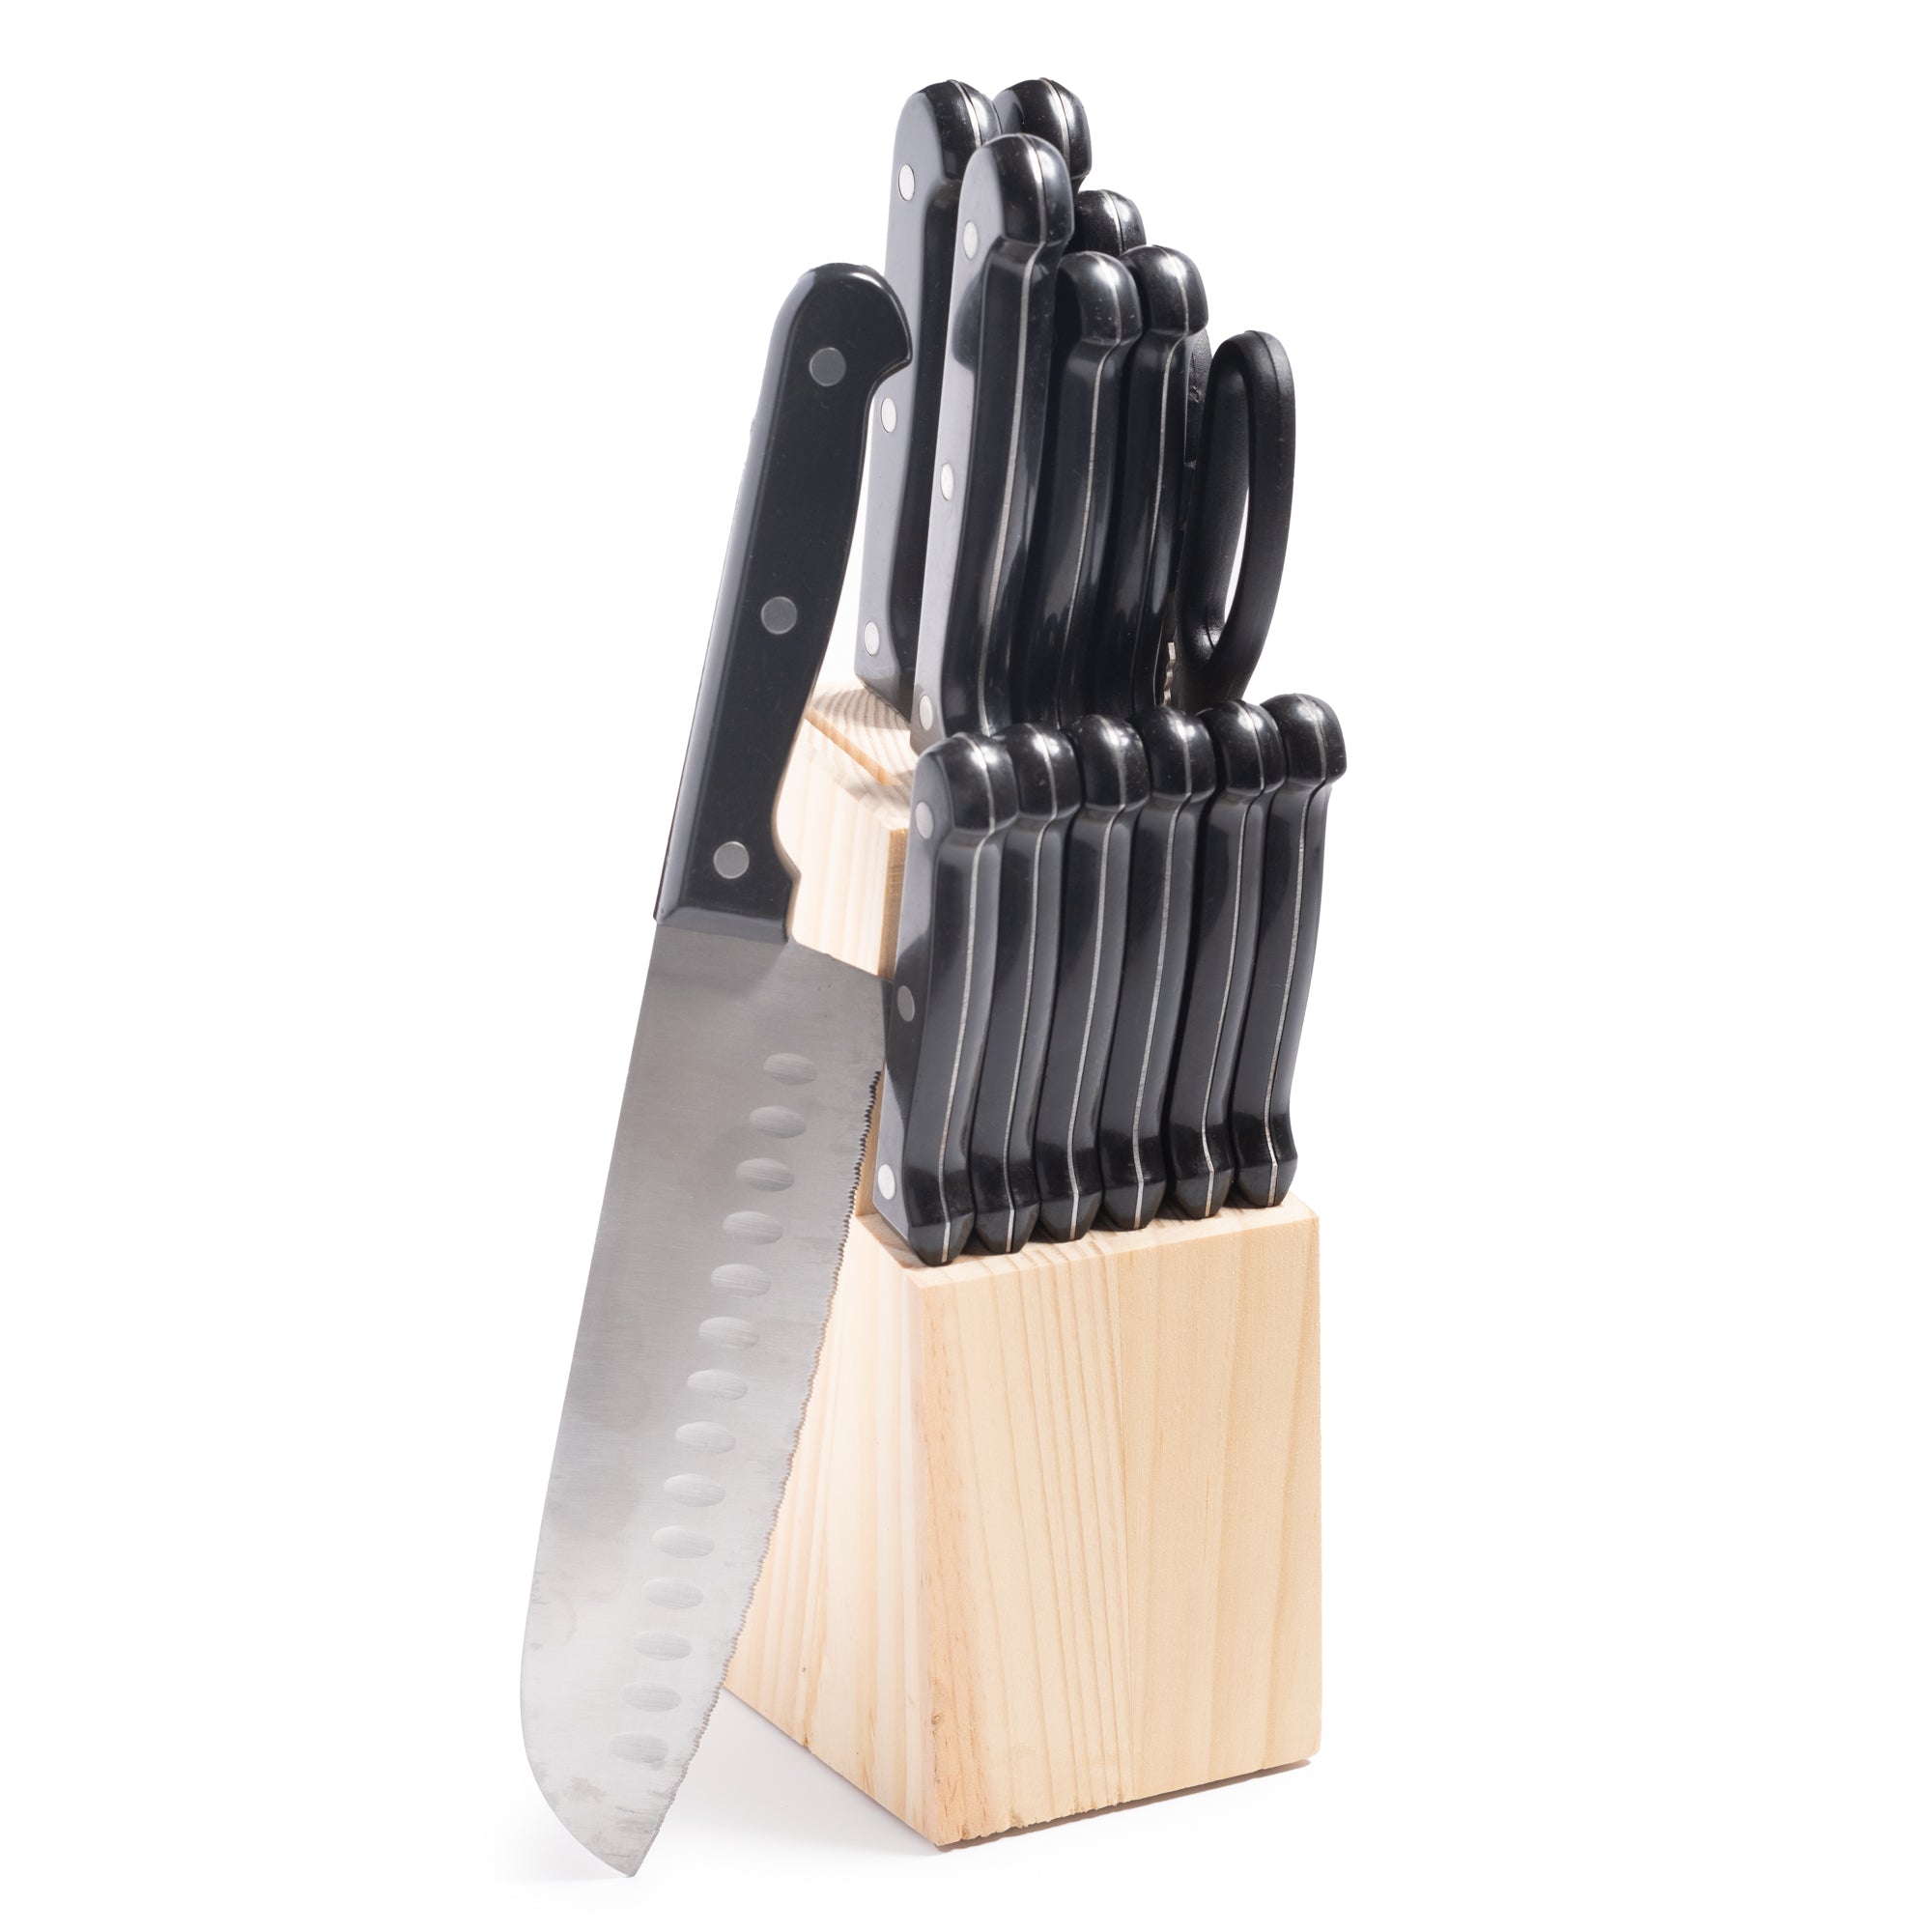 Farberware 15pc Stainless Steel Knife Block Set